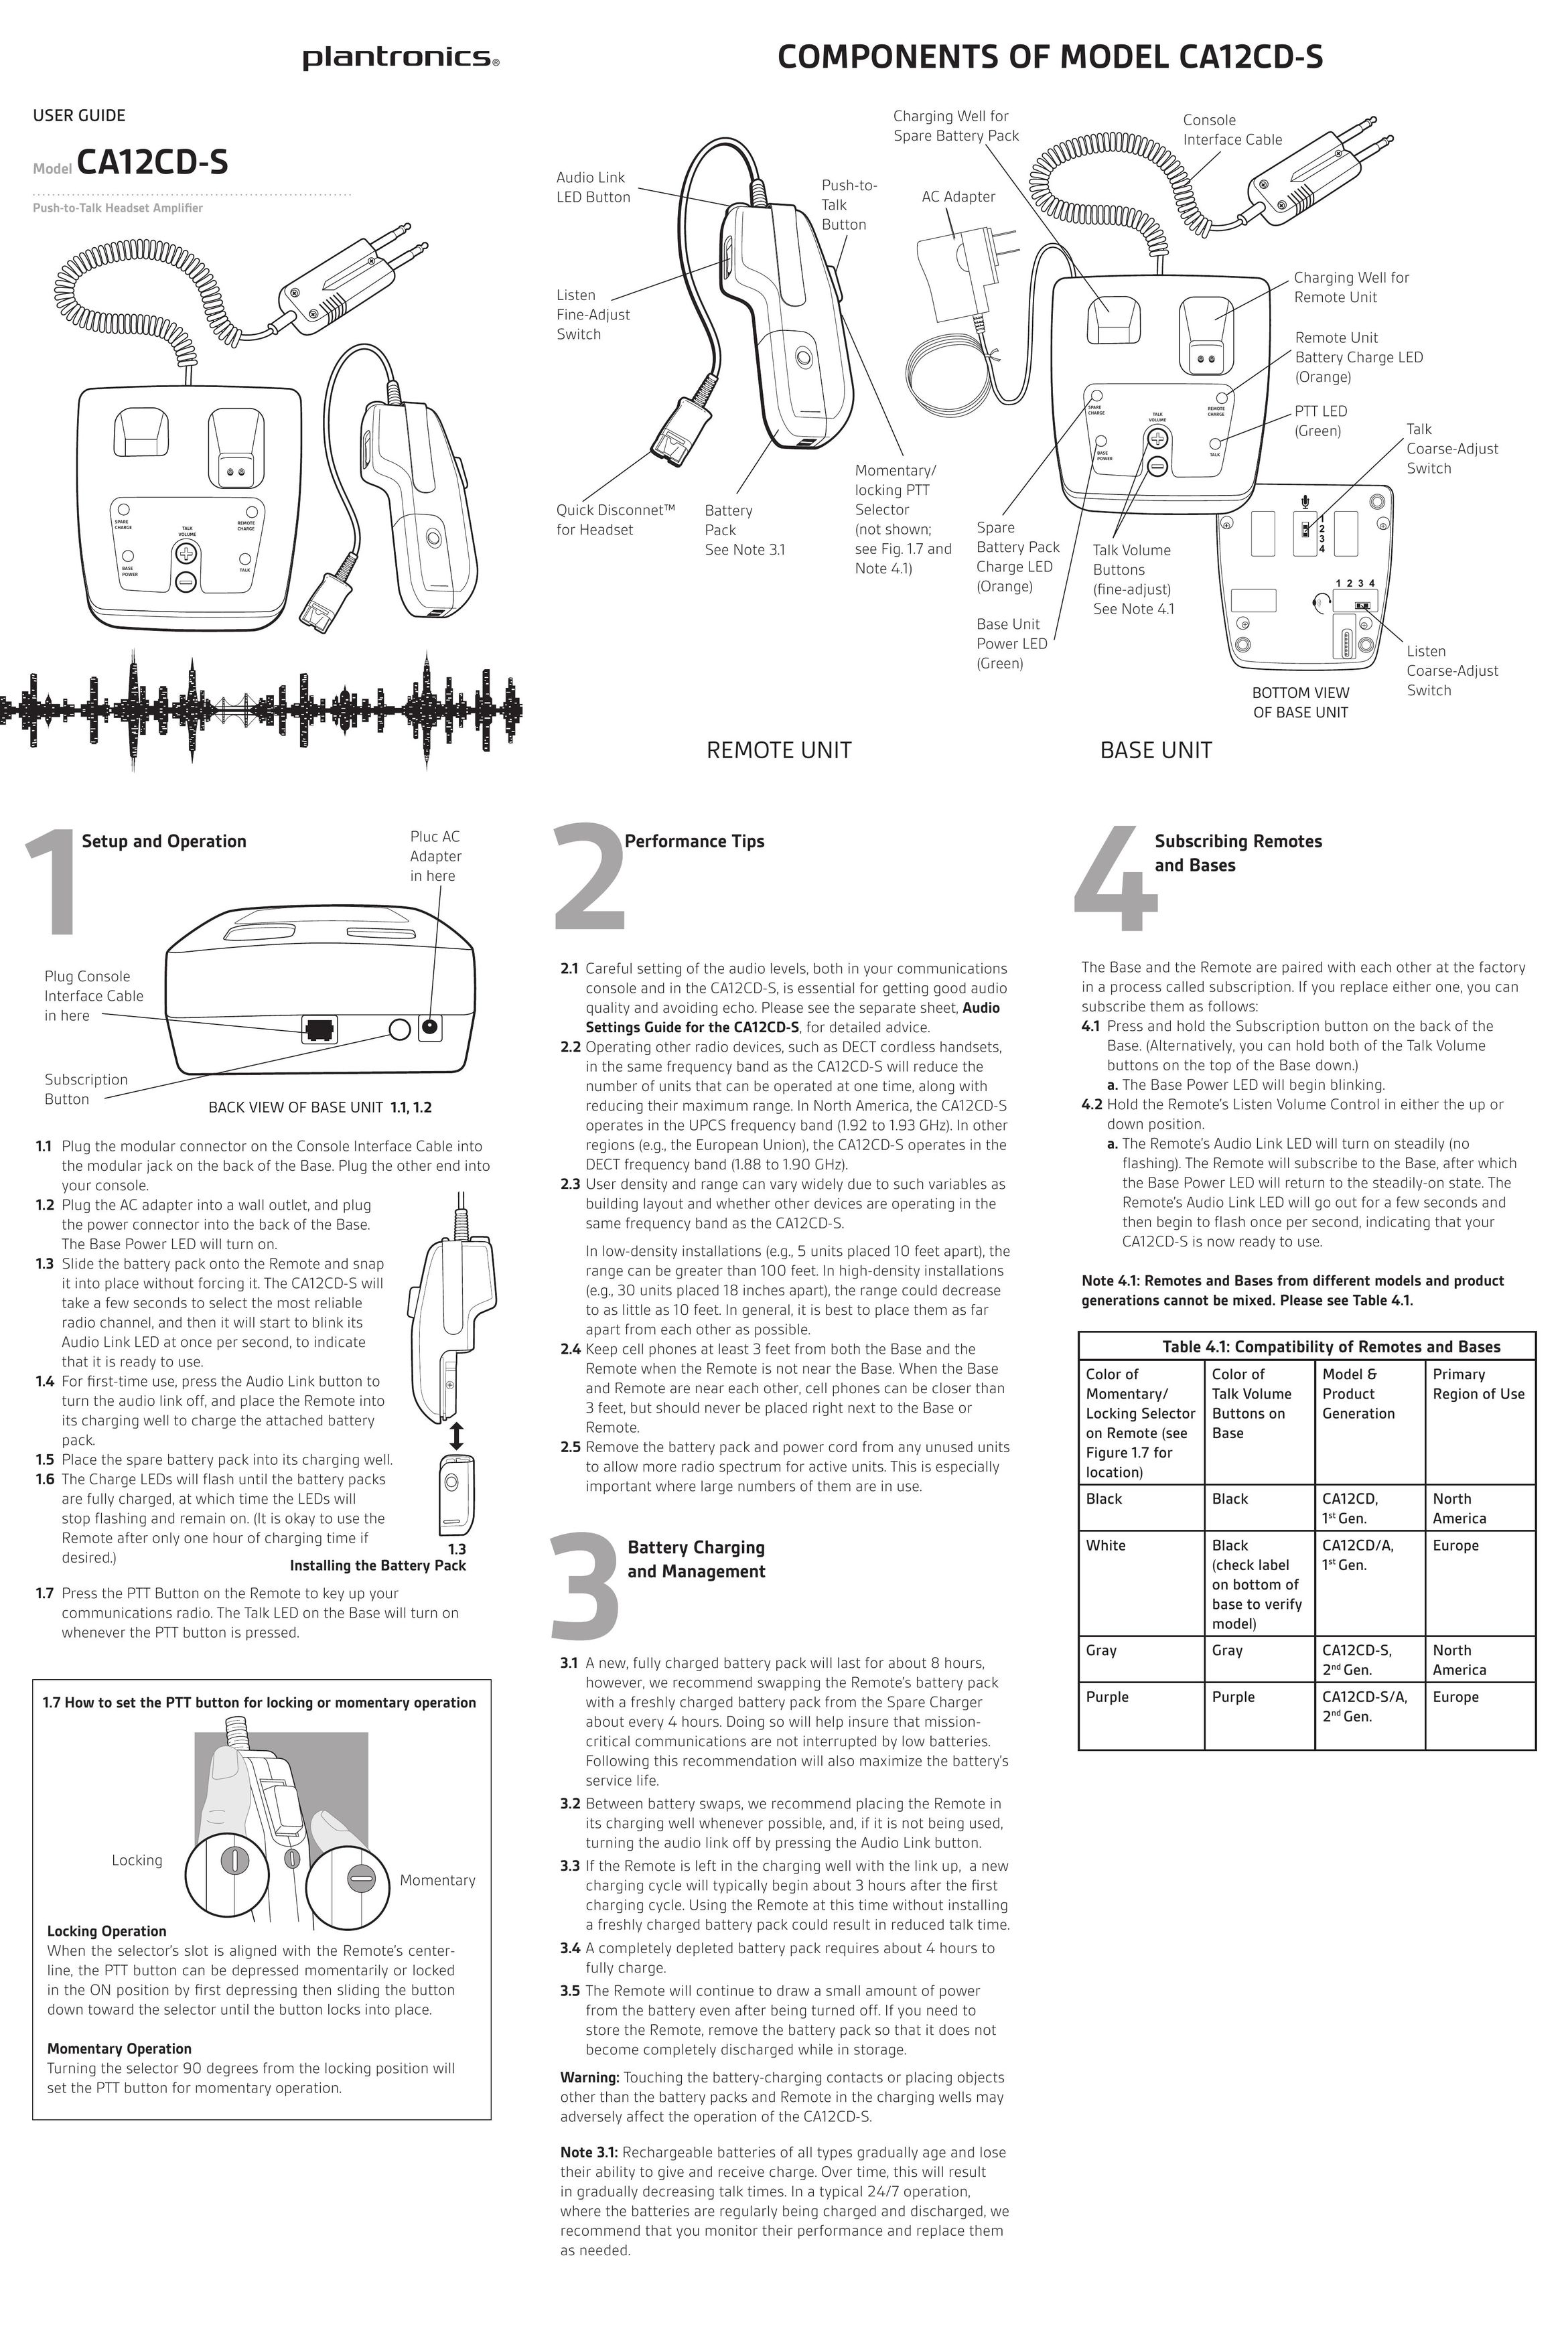 Plantronics CA12CD-S Video Game Headset User Manual